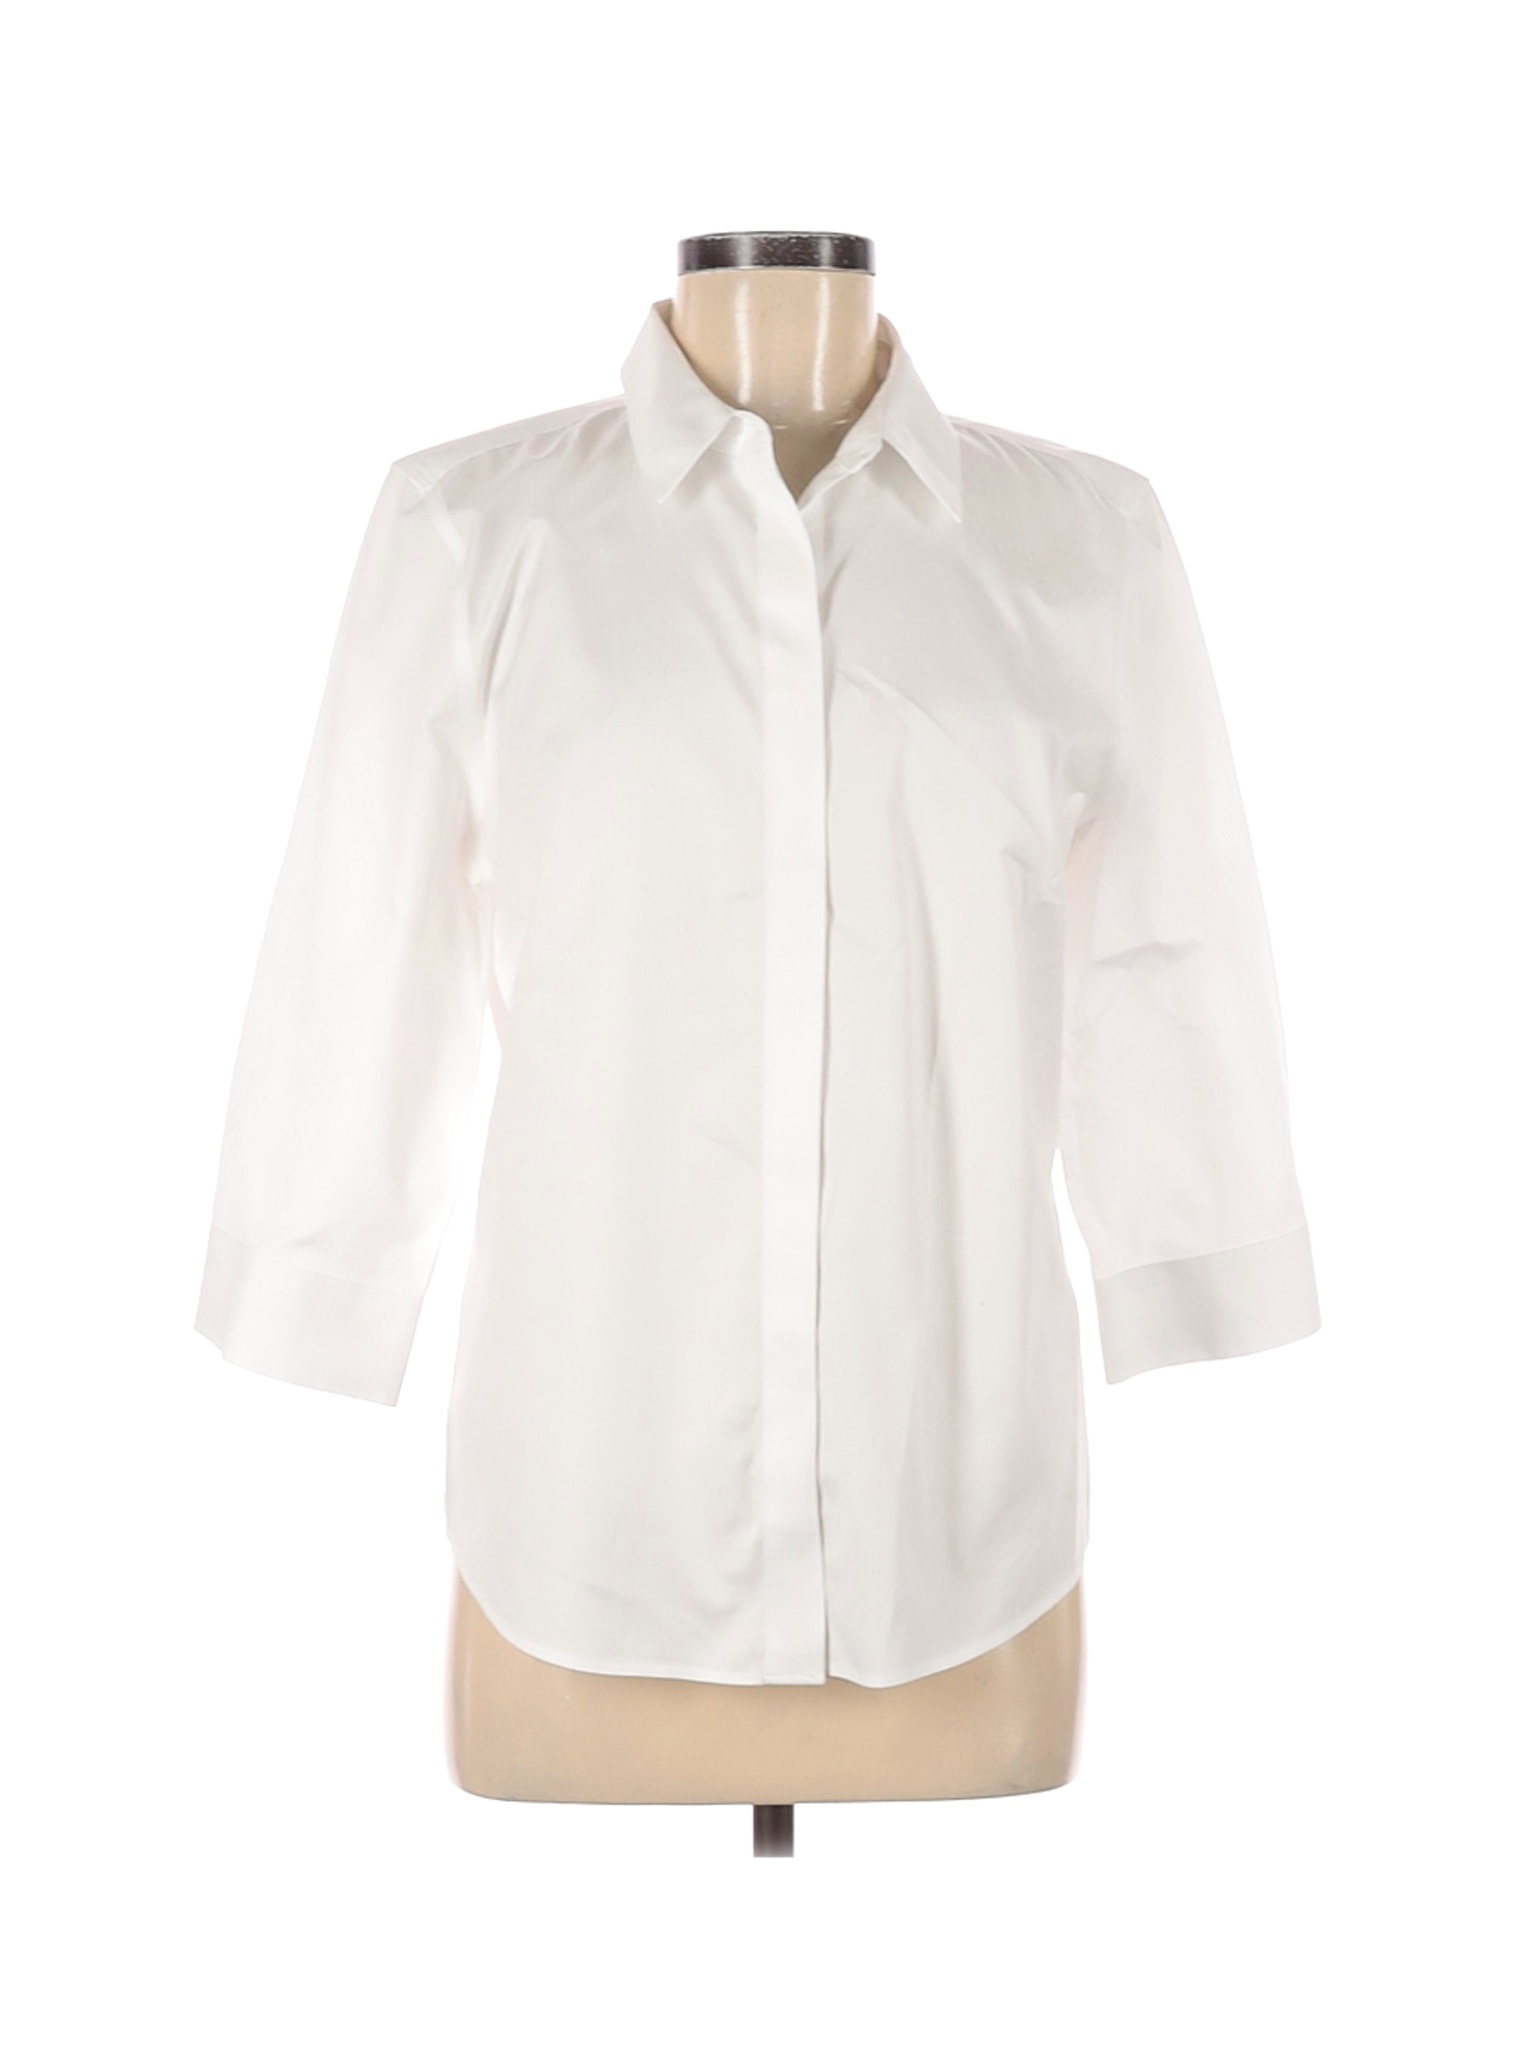 Chico's Women White 3/4 Sleeve Button-Down Shirt M | eBay